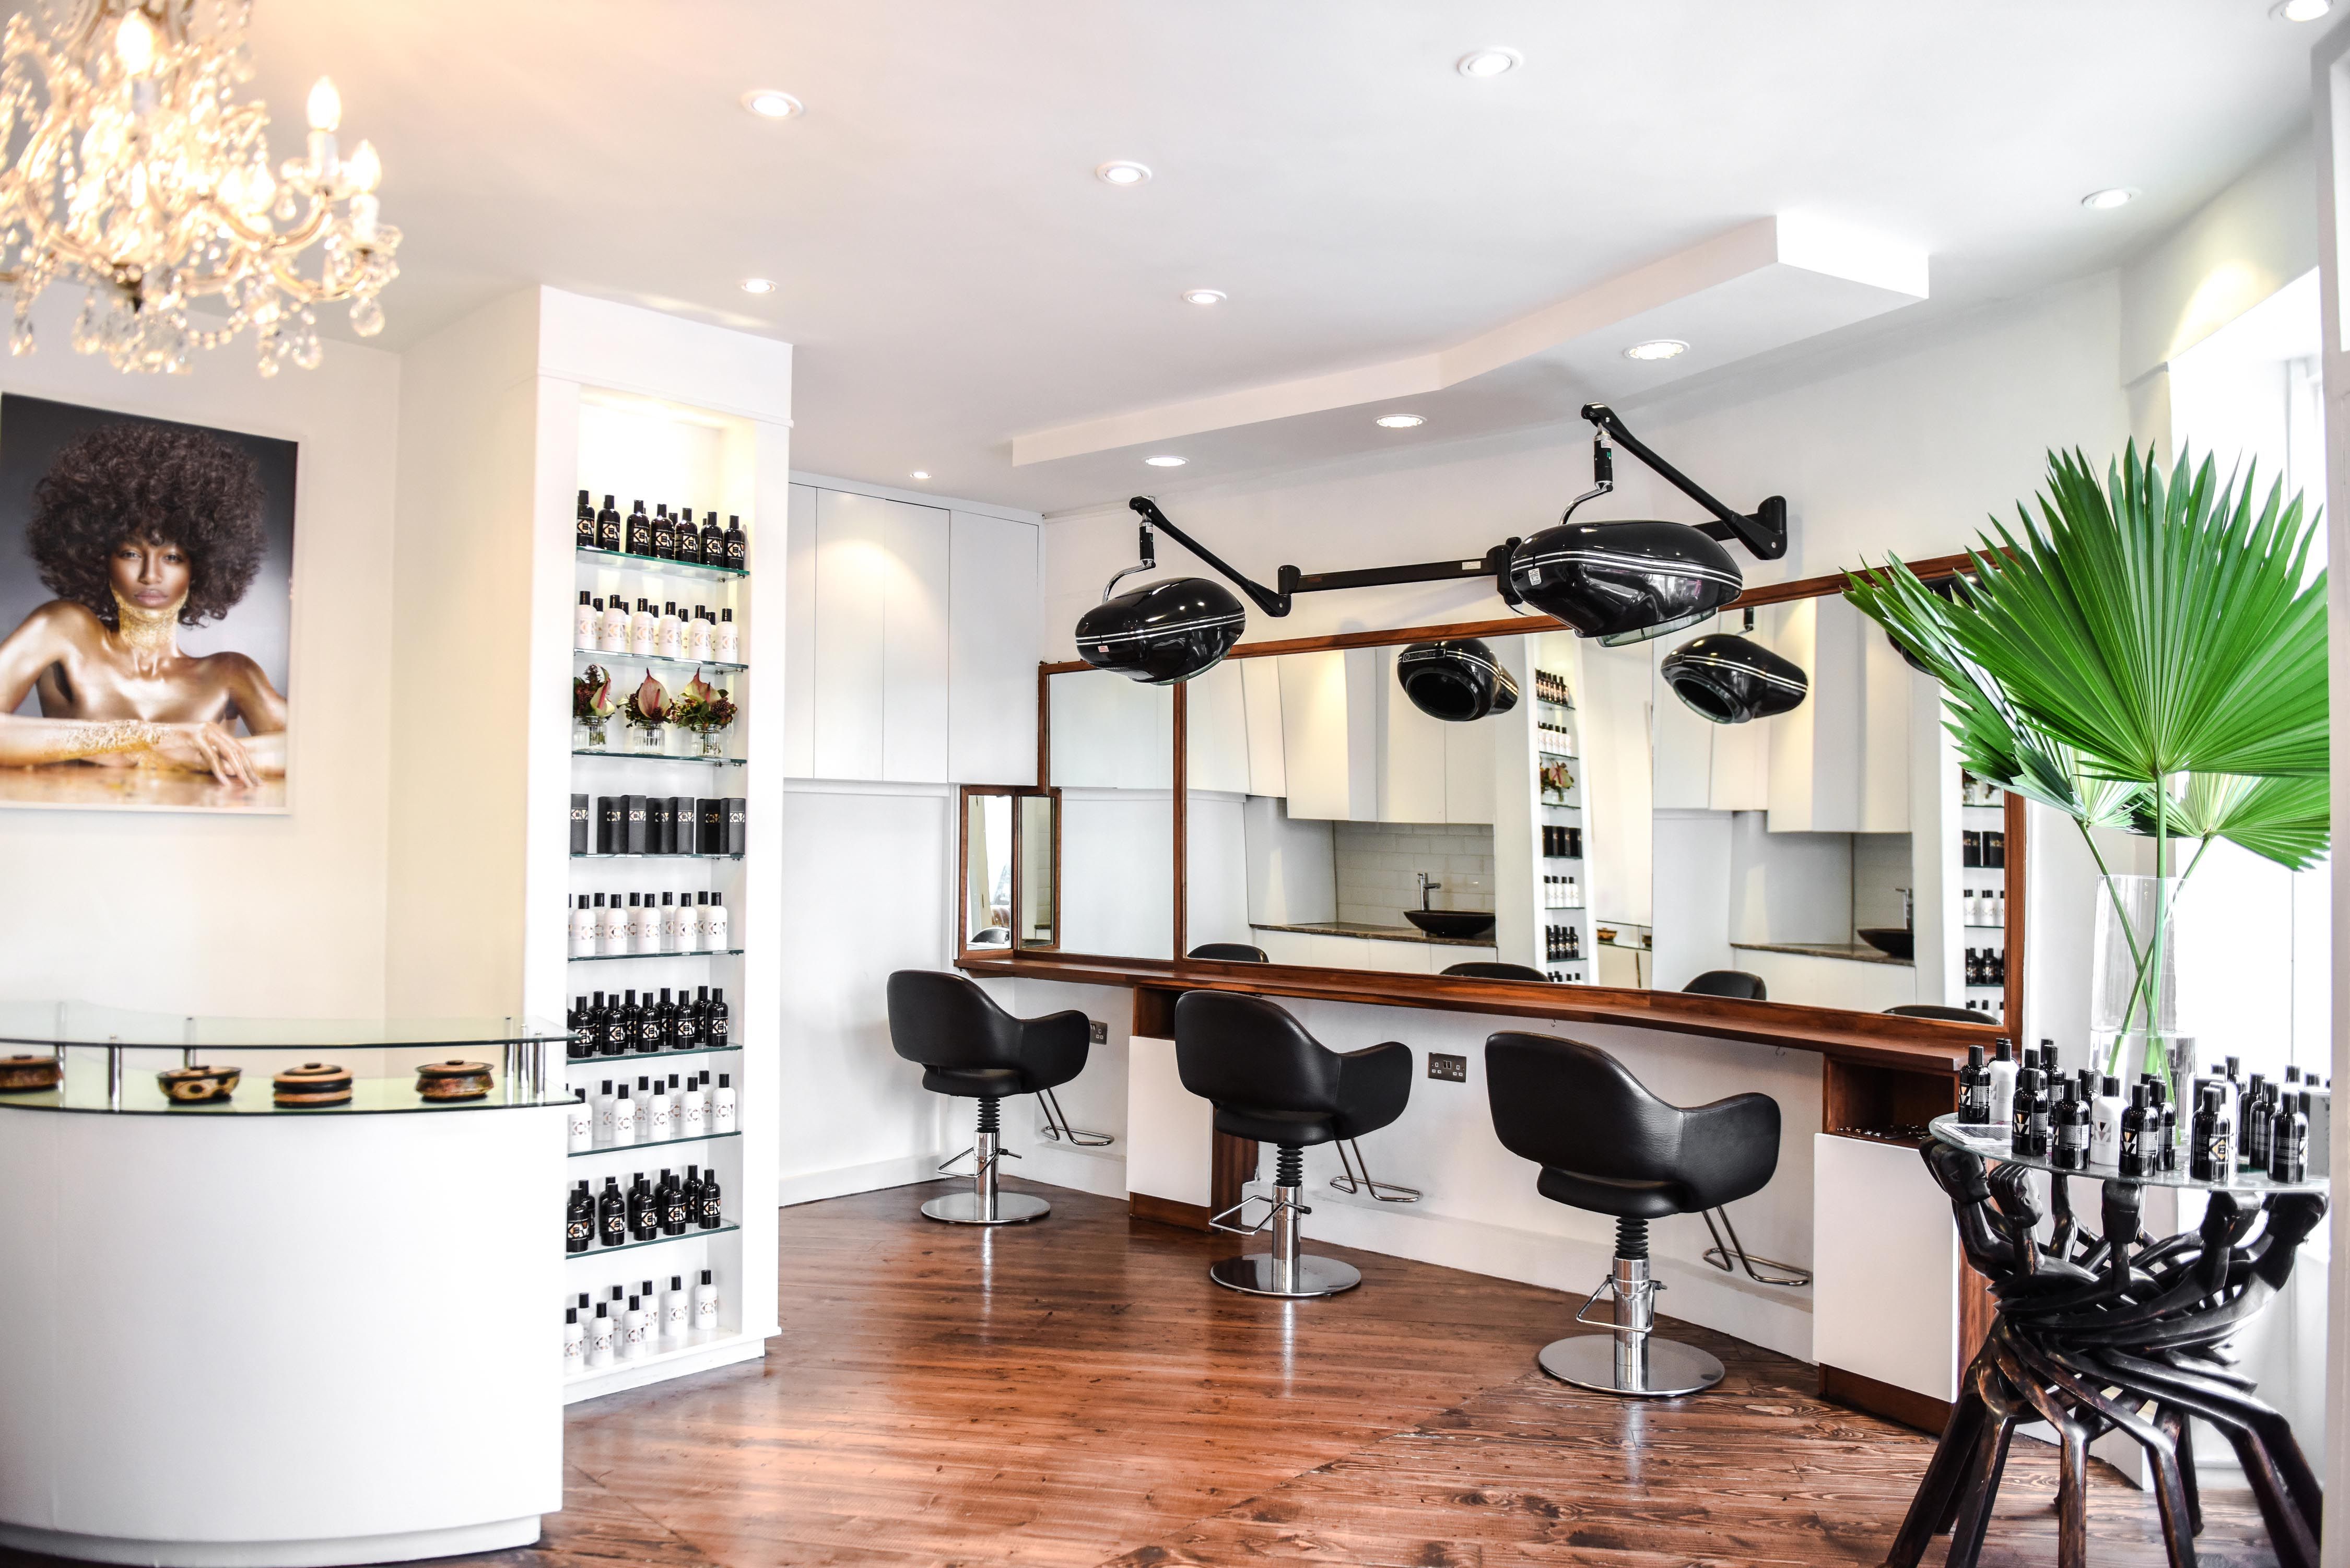 Best London hair salons - Top London hairdressers